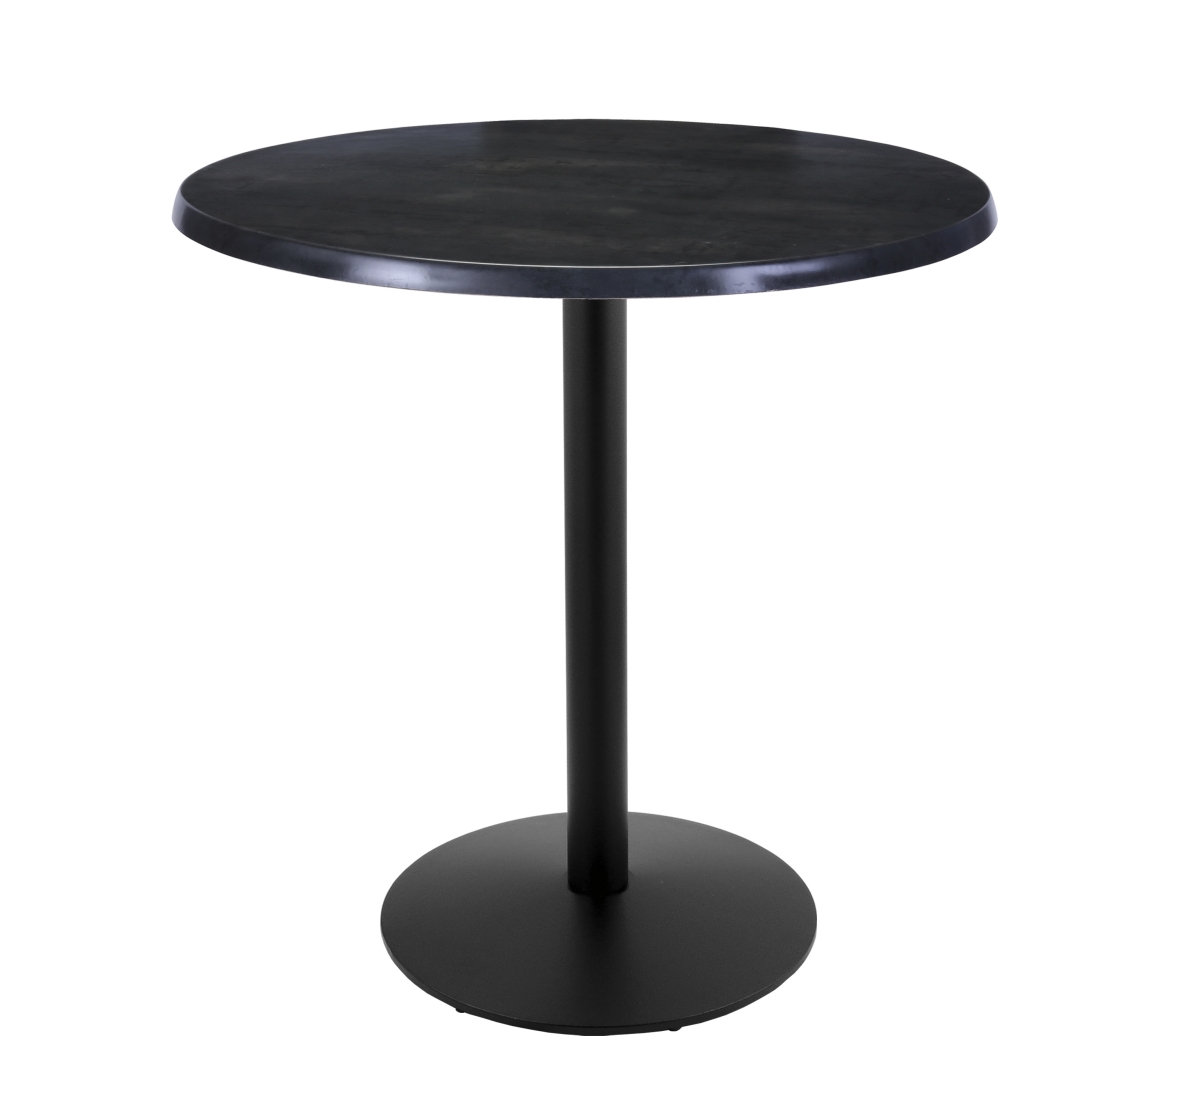 Od214-2242bwod36rblkstl 42 In. Black Table With 36 In. Diameter Indoor & Outdoor Black Steel Round Top